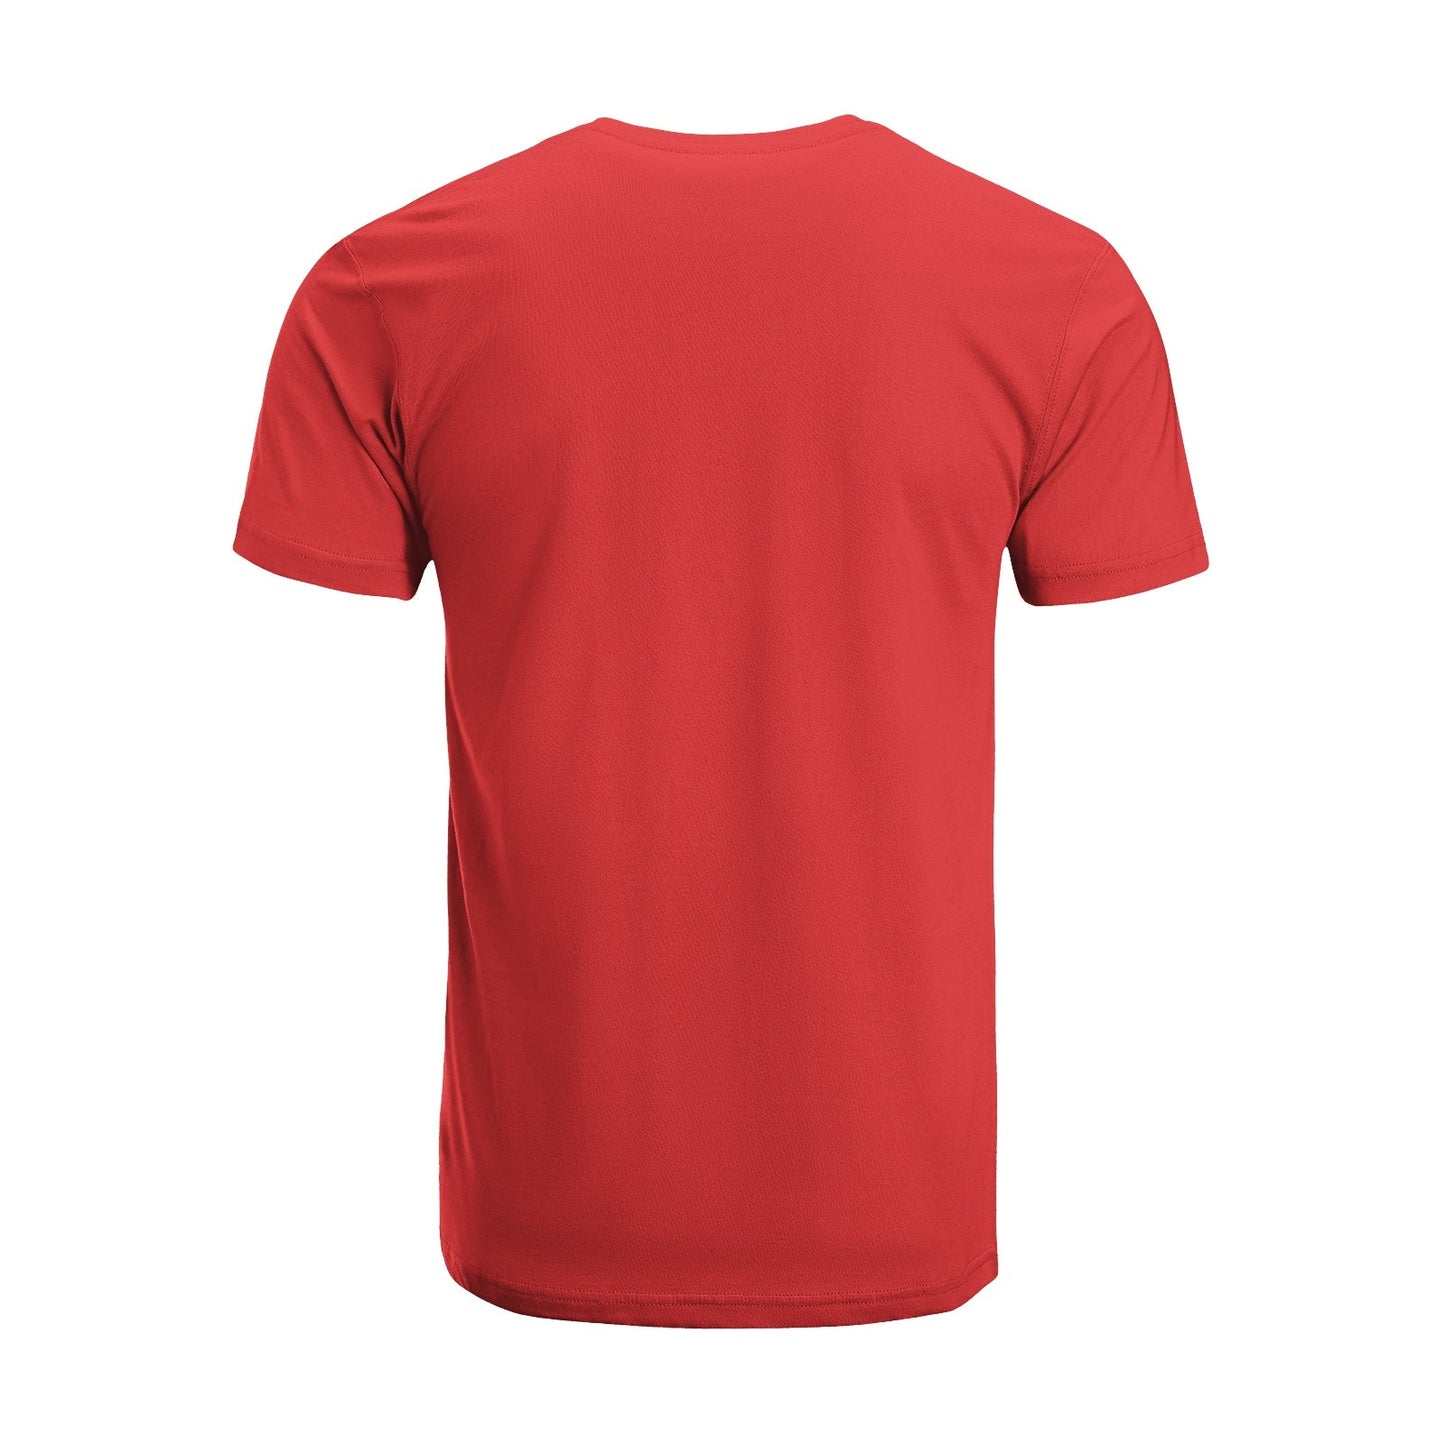 Unisex Short Sleeve Crew Neck Cotton Jersey T-Shirt VEGAN 04